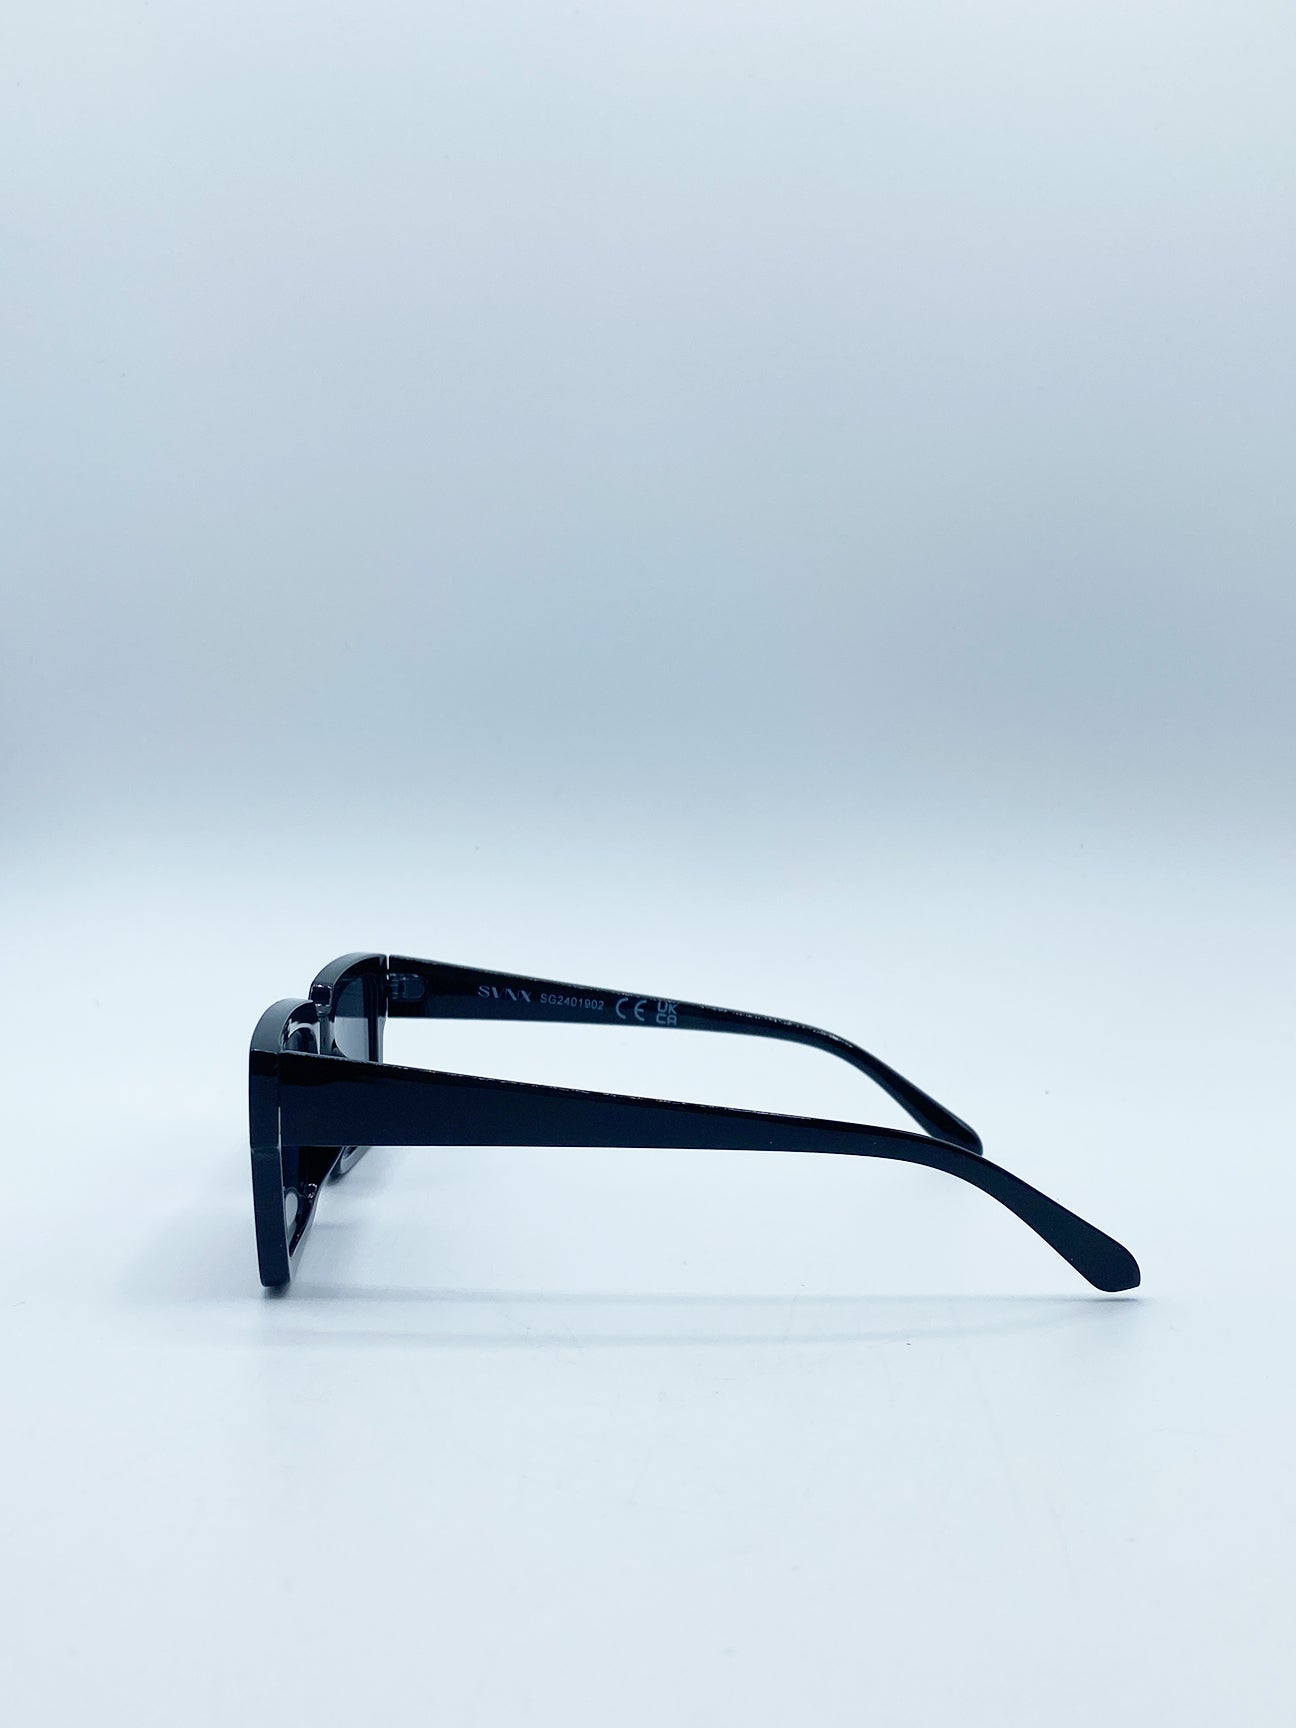 Square Frame Sunglasses in Black